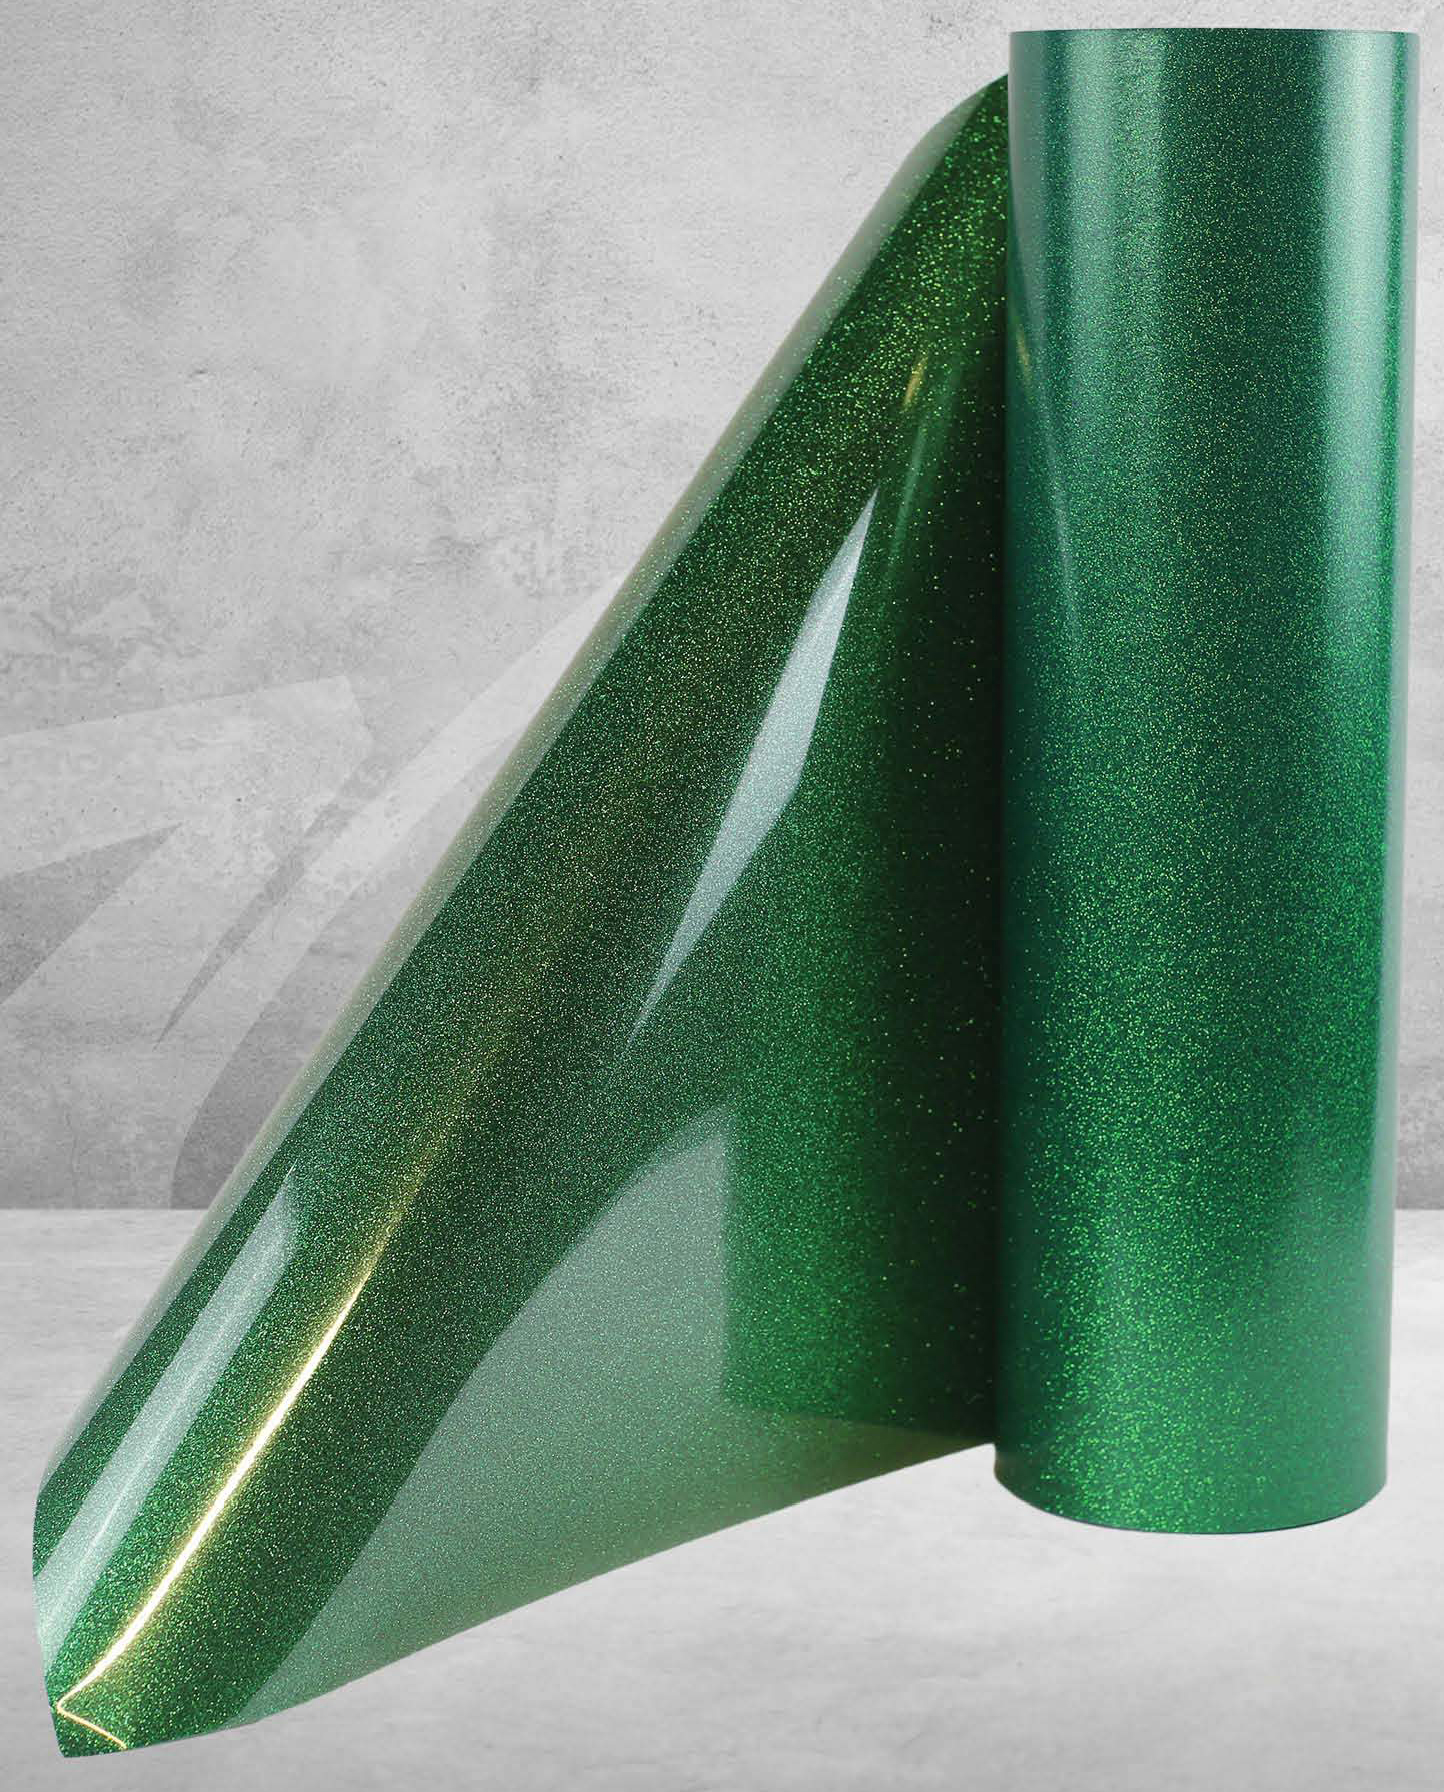 GlitterFlexULTRA Green - Specialty Materials GlitterFlex Ultra Heat Transfer Film